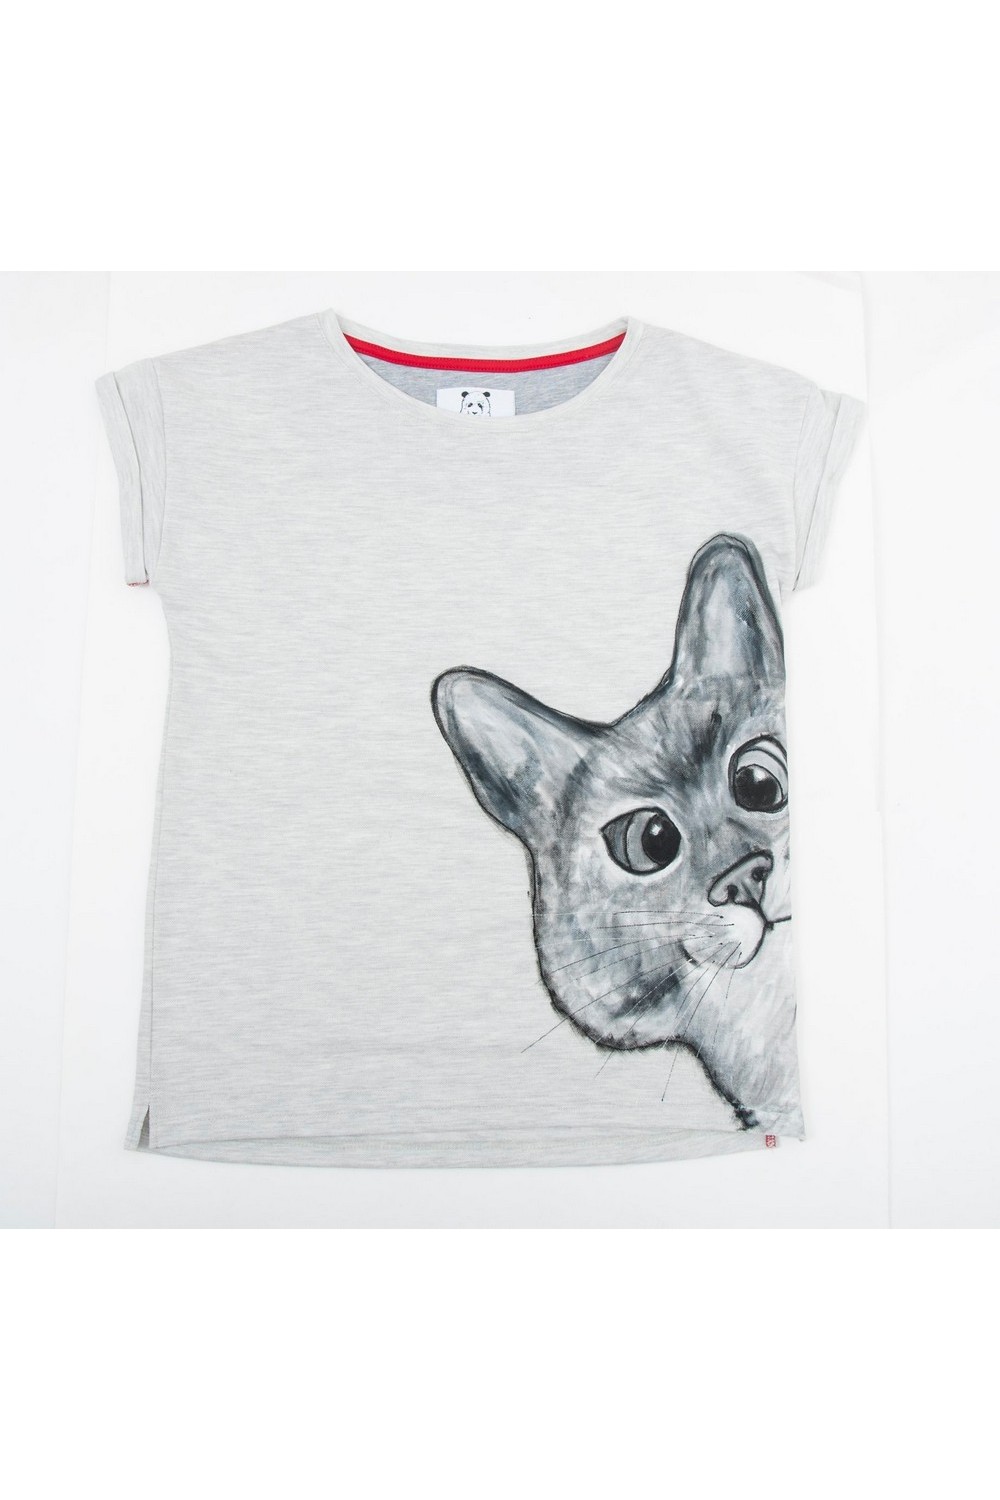 Buy Sport Grey Women Cotton Print tee shirt , Sleeveless Cat tshirt, Unique stylish t shirt